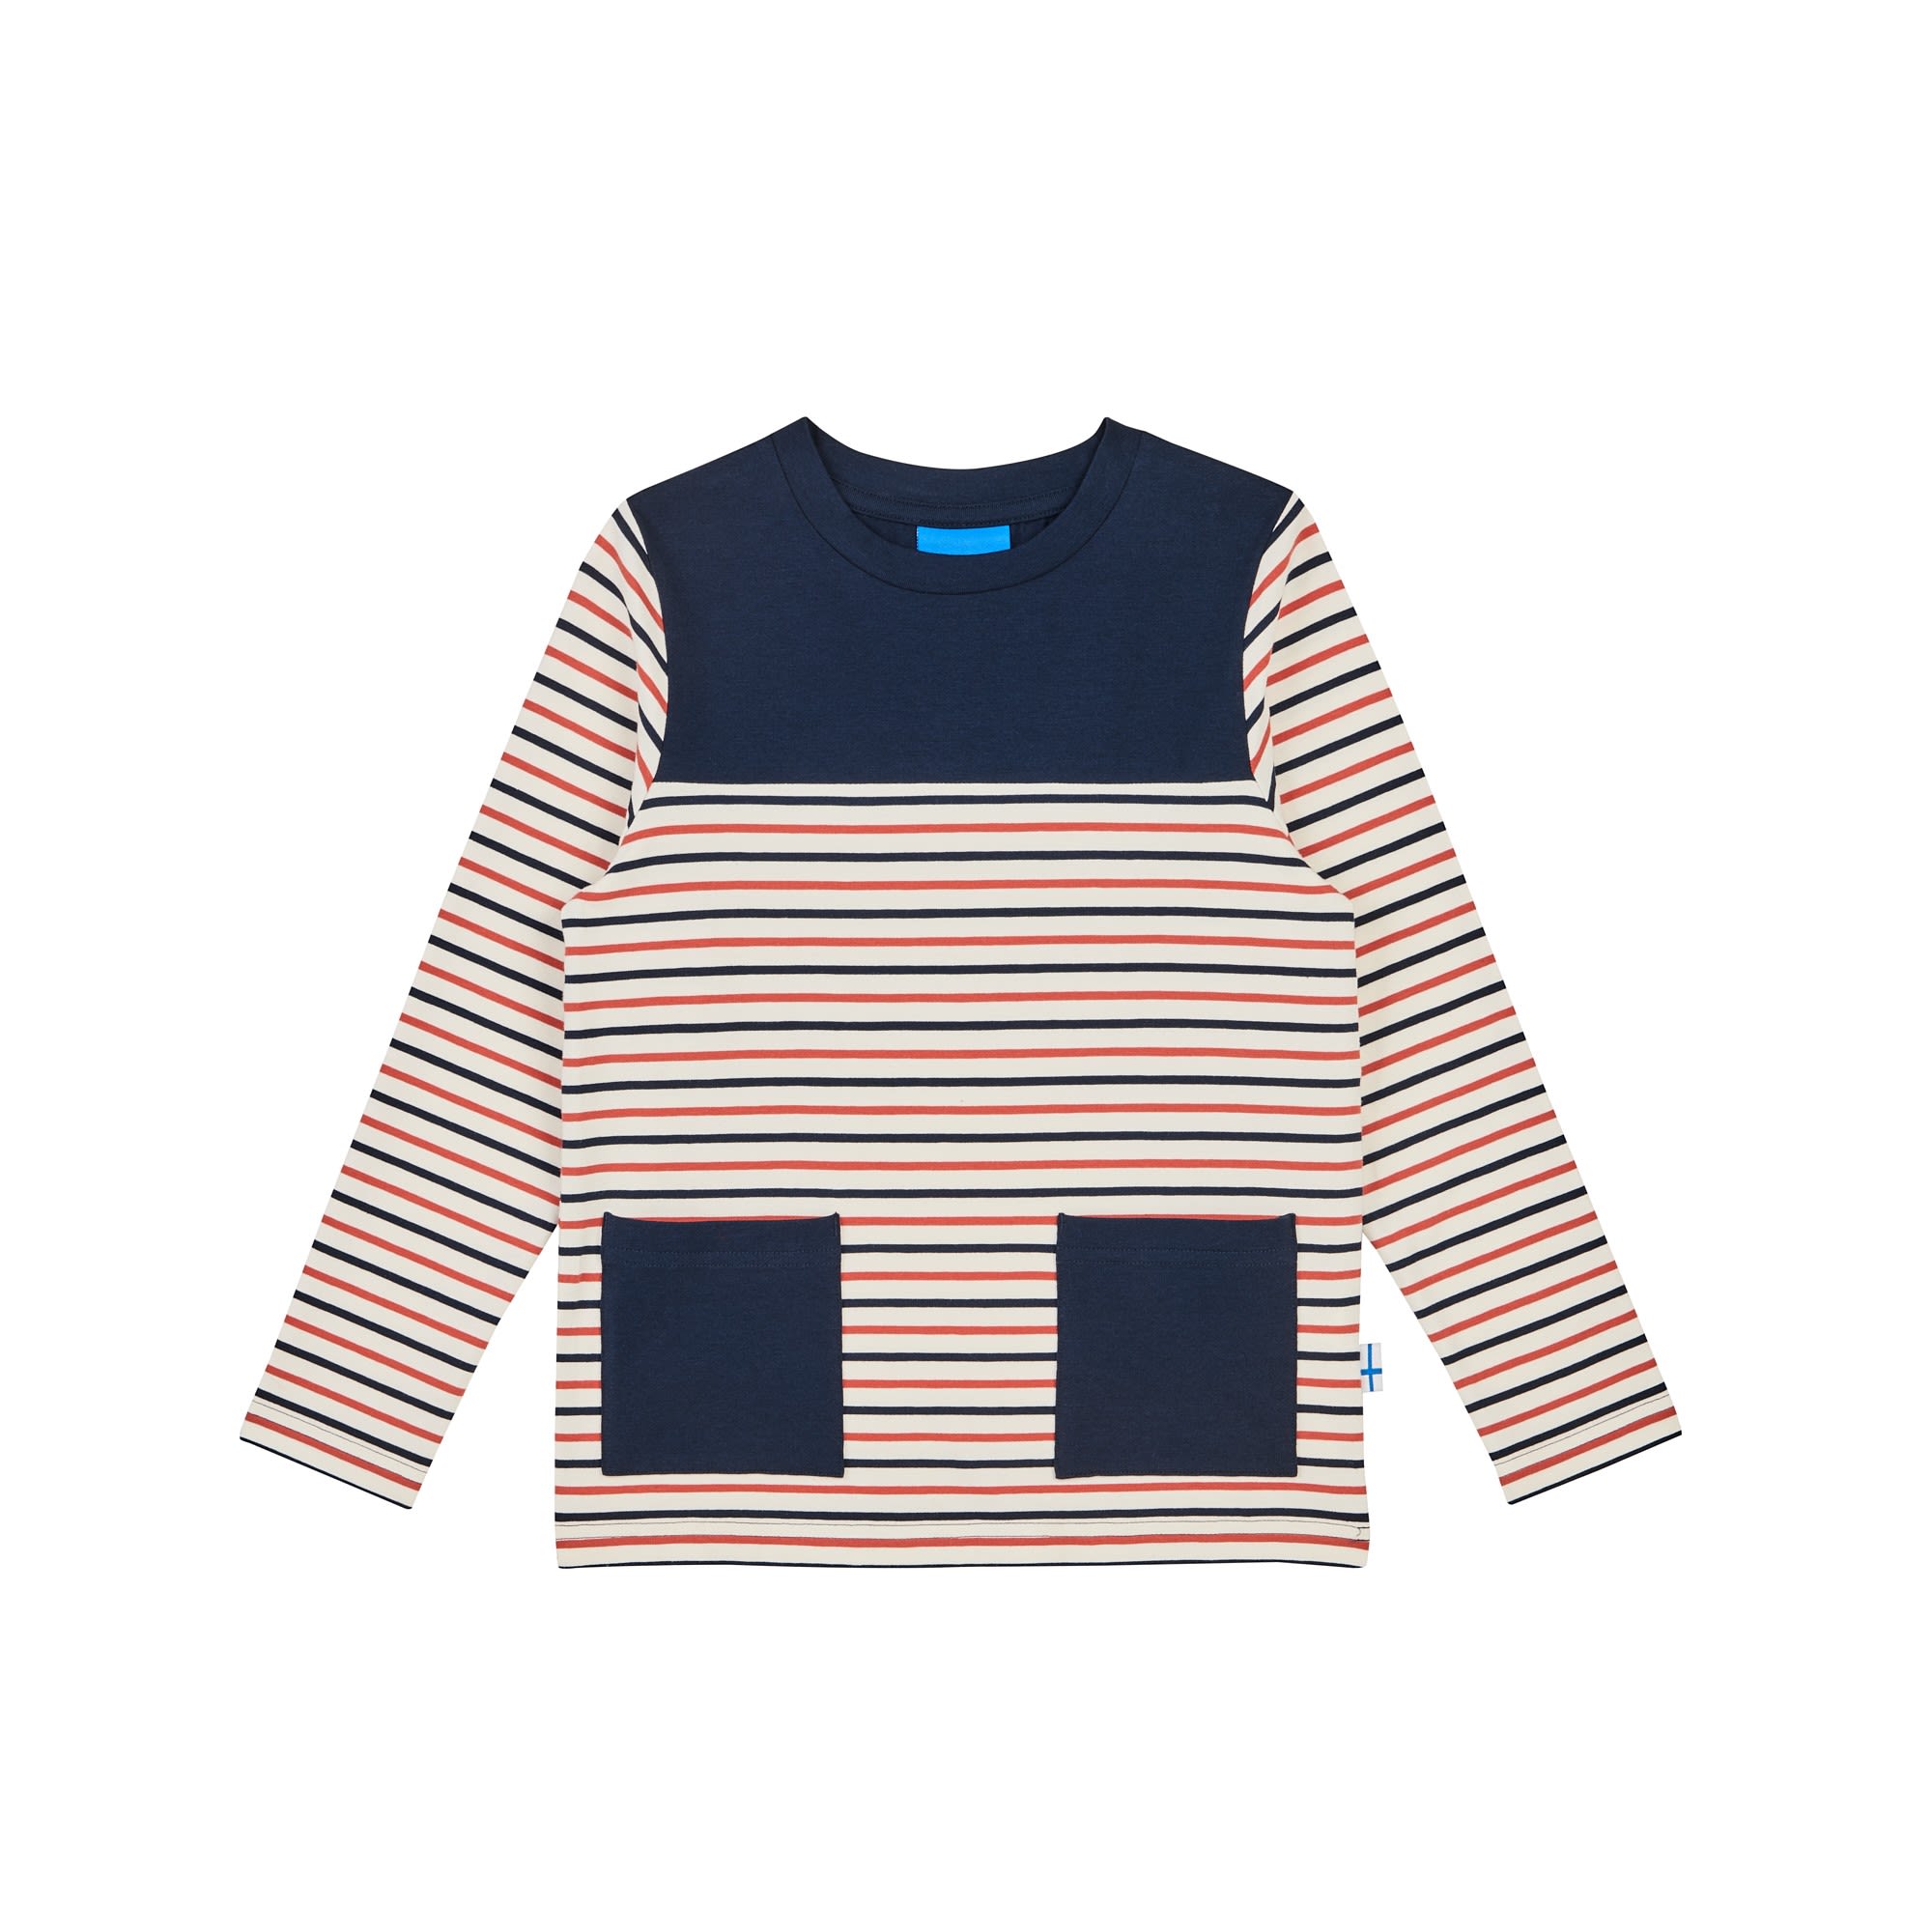 Finkid Matruusi Colorblock - Gestreift - Beige - Blau- Langarm-Shirts- Grsse 80 - 90 - Farbe Navy - Chili